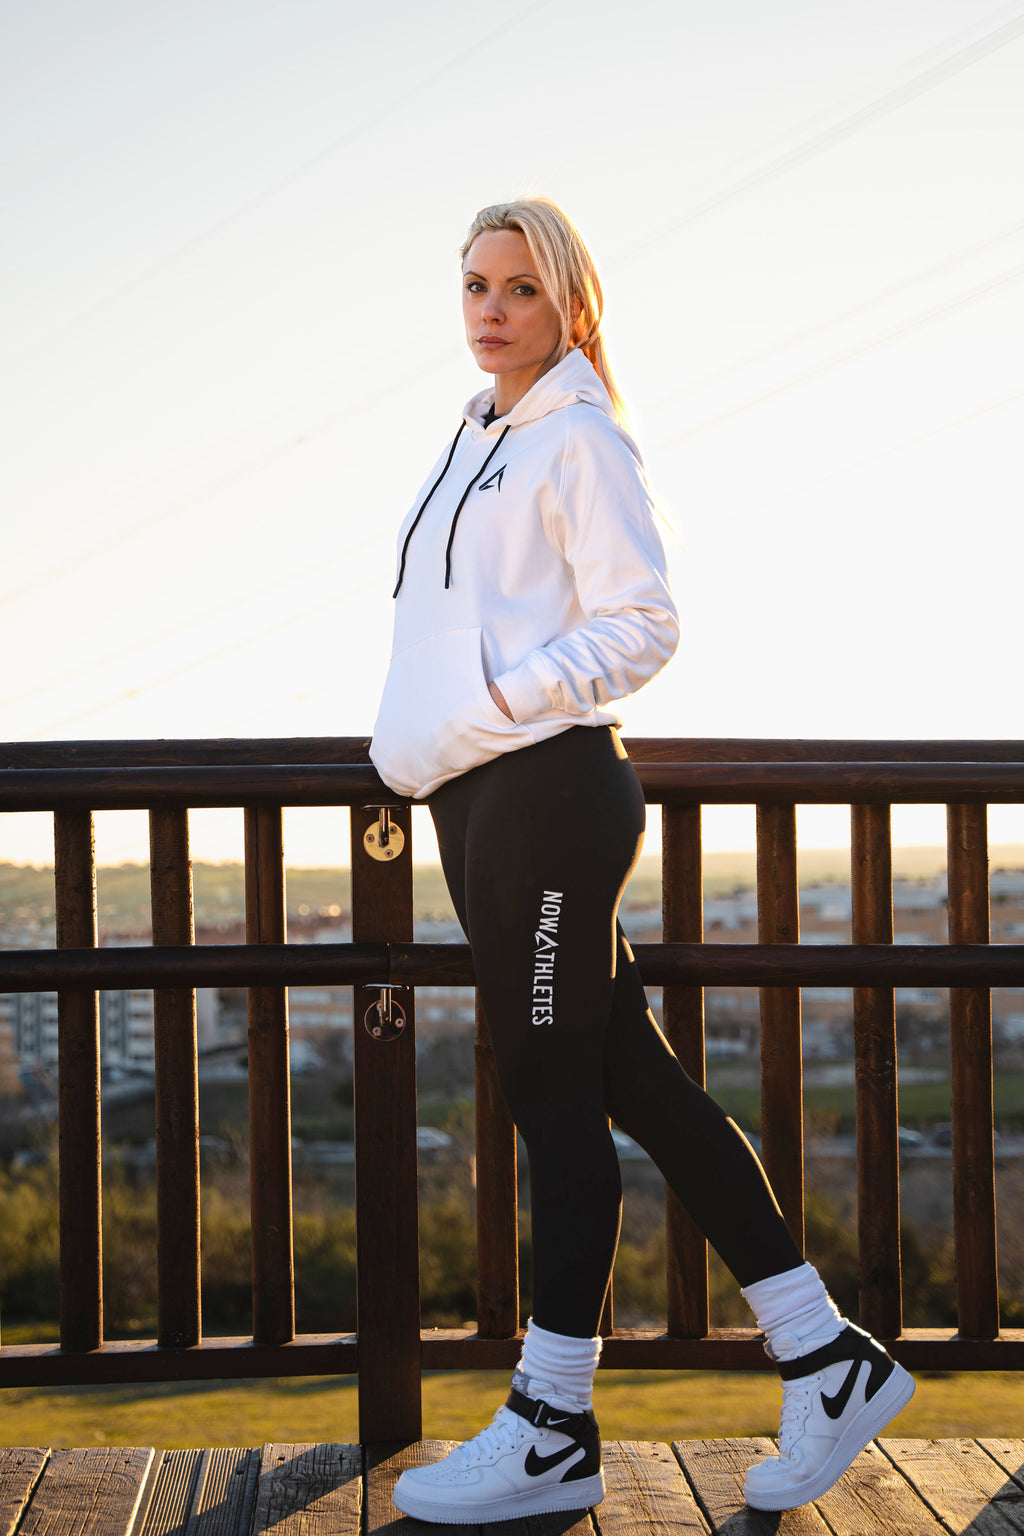 & NOWATHLETES – Leggins Now Clothing | Woman Gym | Athletes USA Fitness